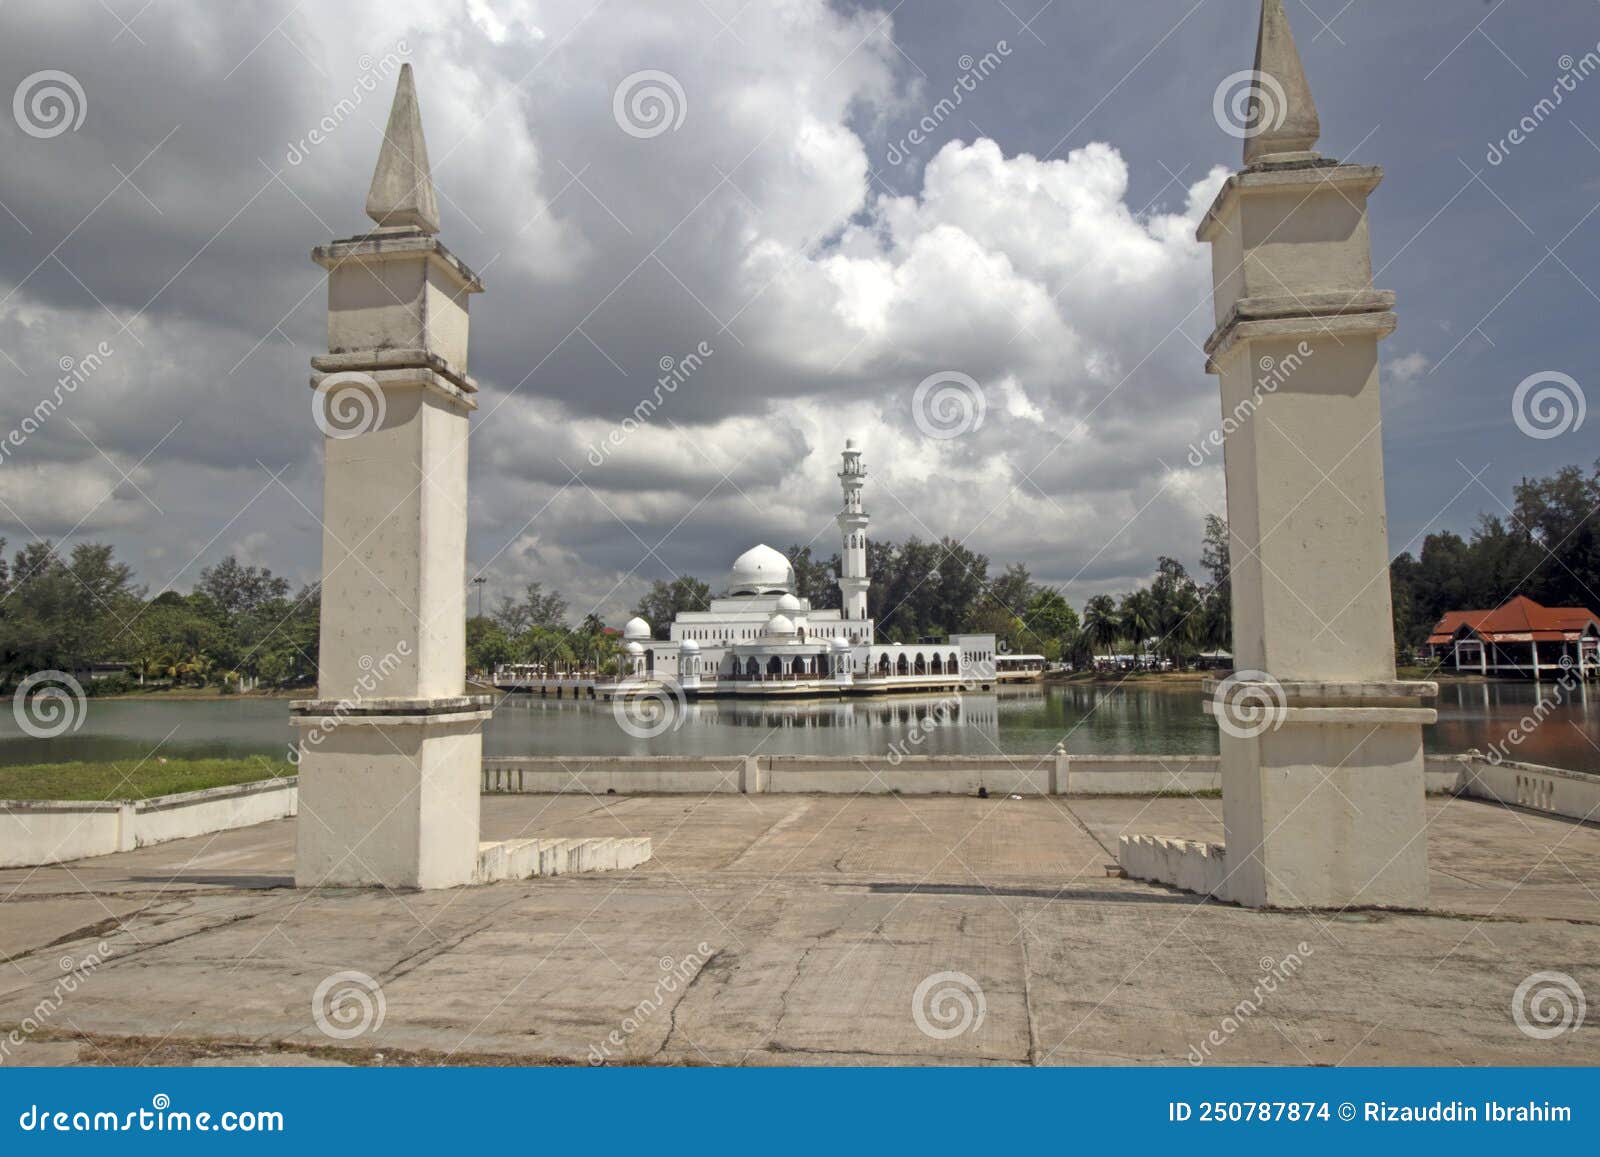 the kuala ibai floating mosque or tengku tengah zaharah mosque under heavy clouds as seen from lakeside pavilion in terengganu, m